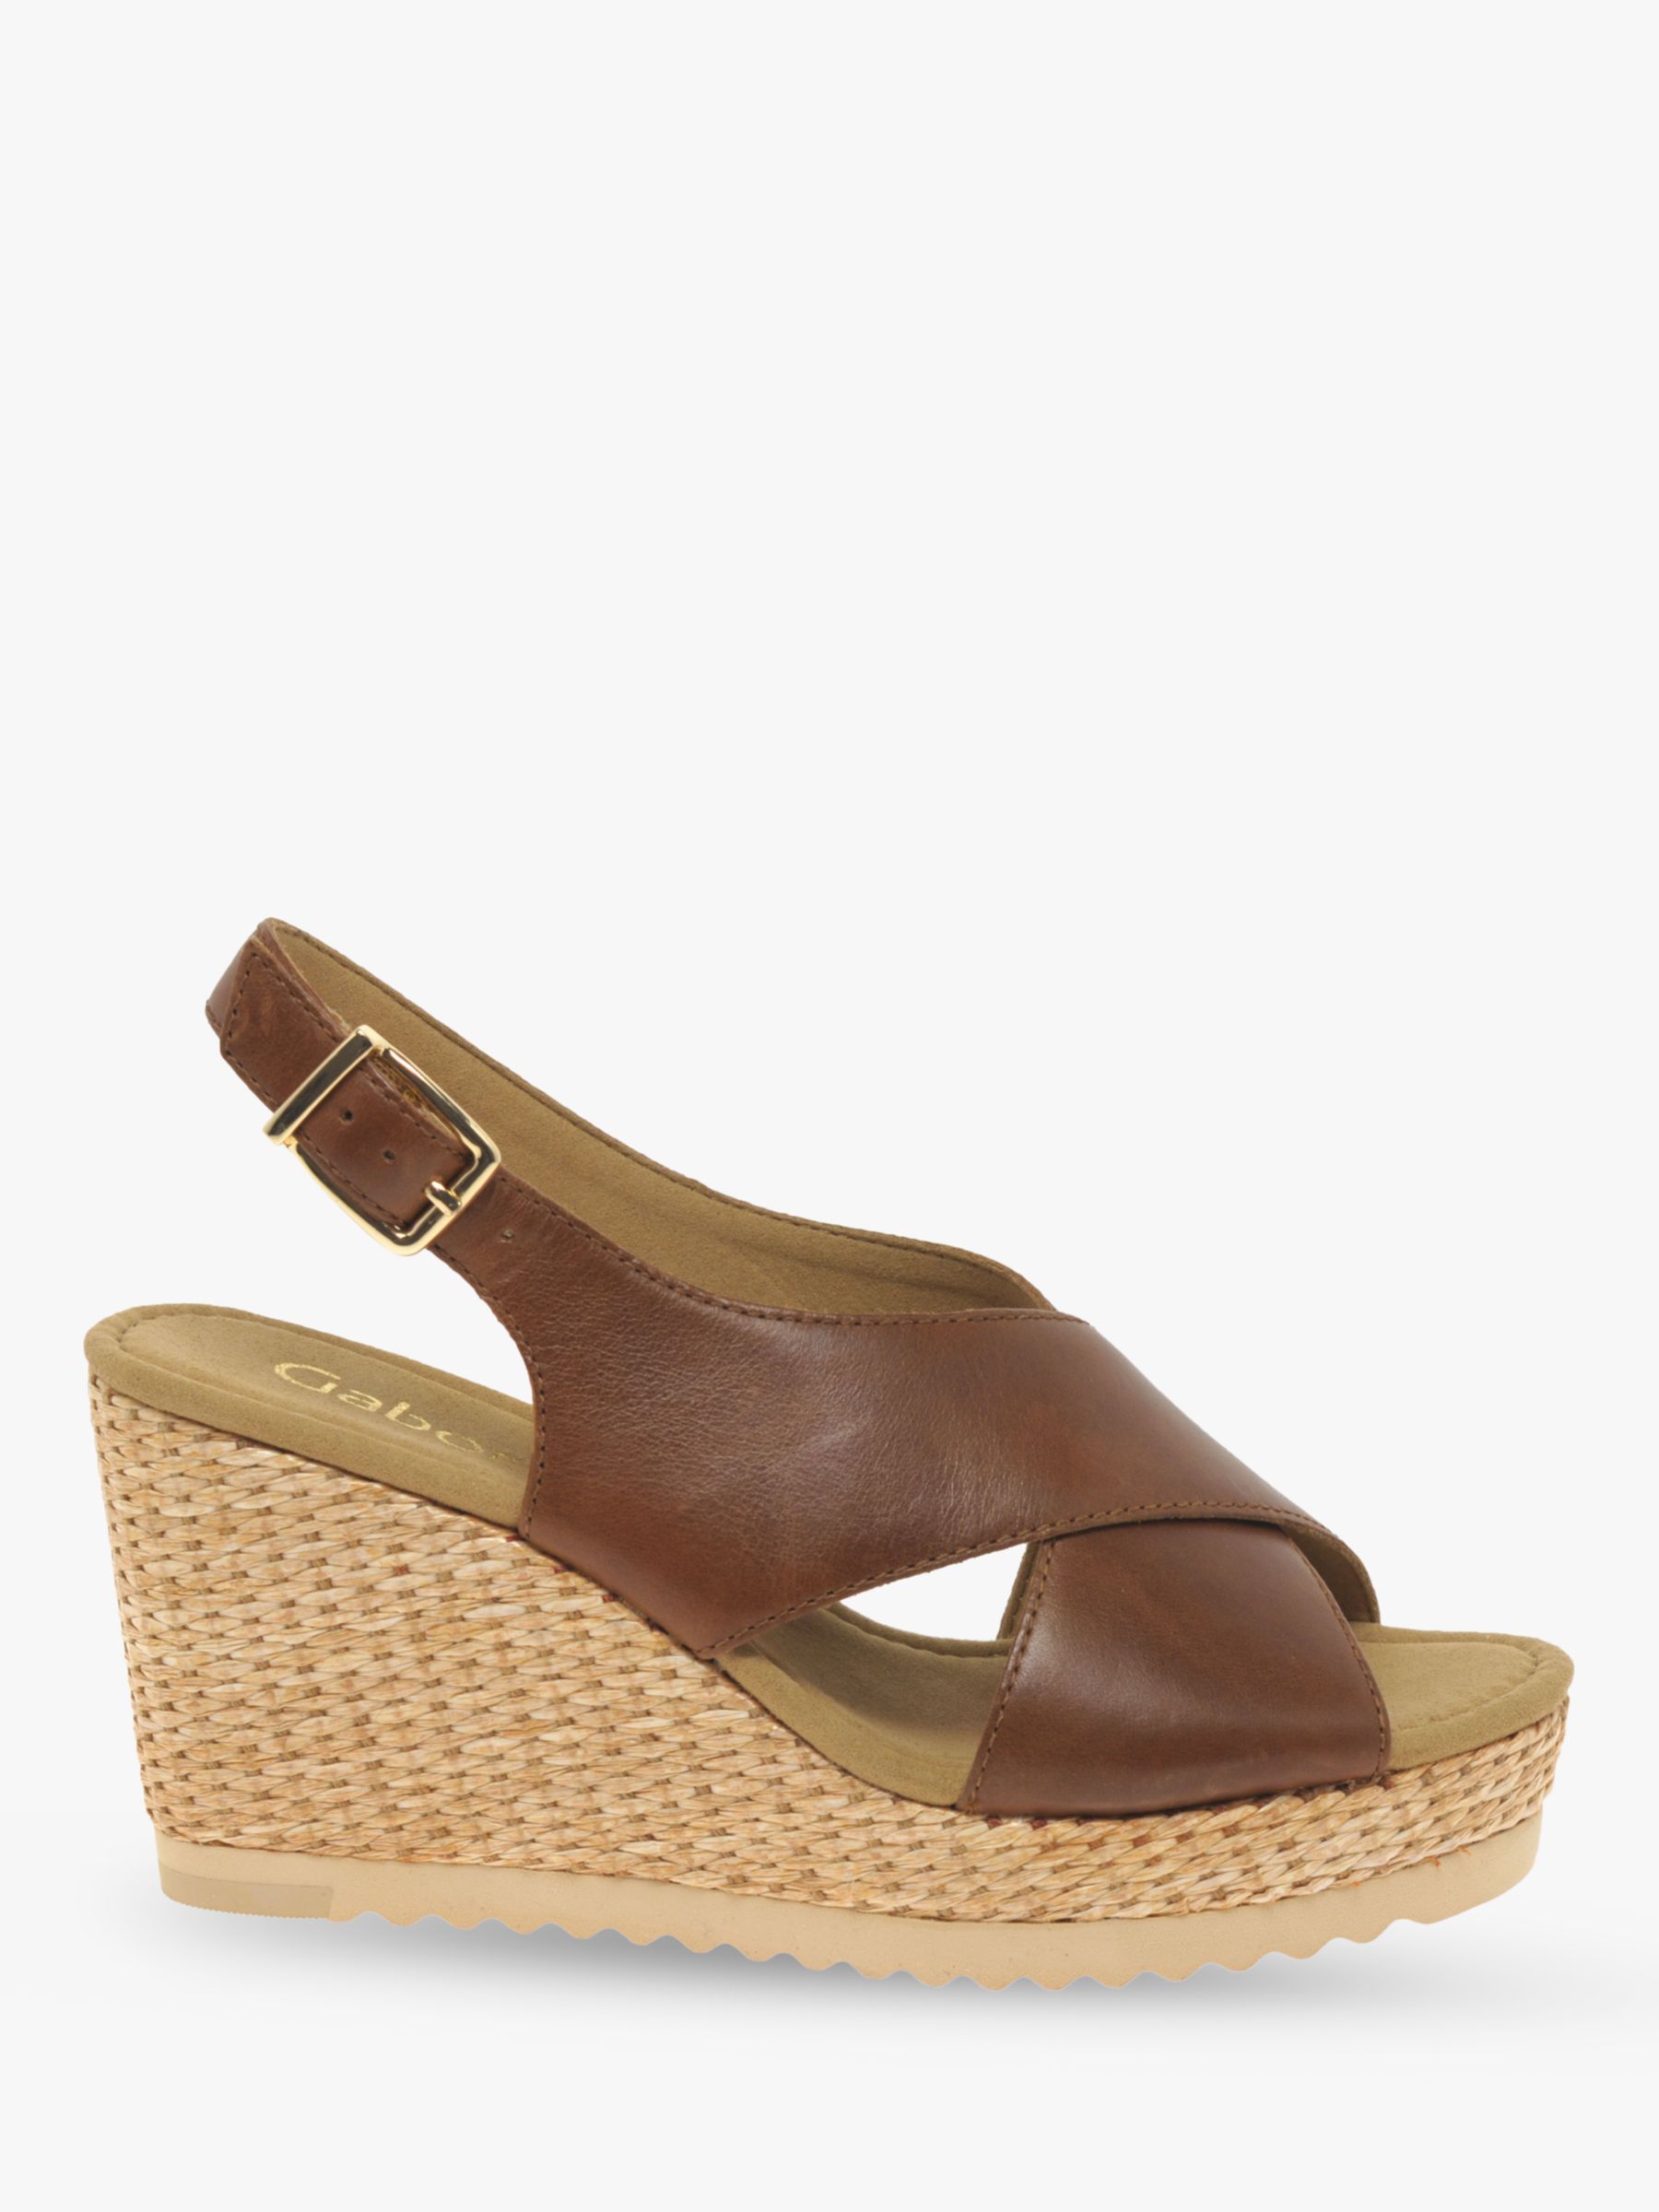 Gabor Warbler Leather Wedge Heel Sandals, Brown, 5